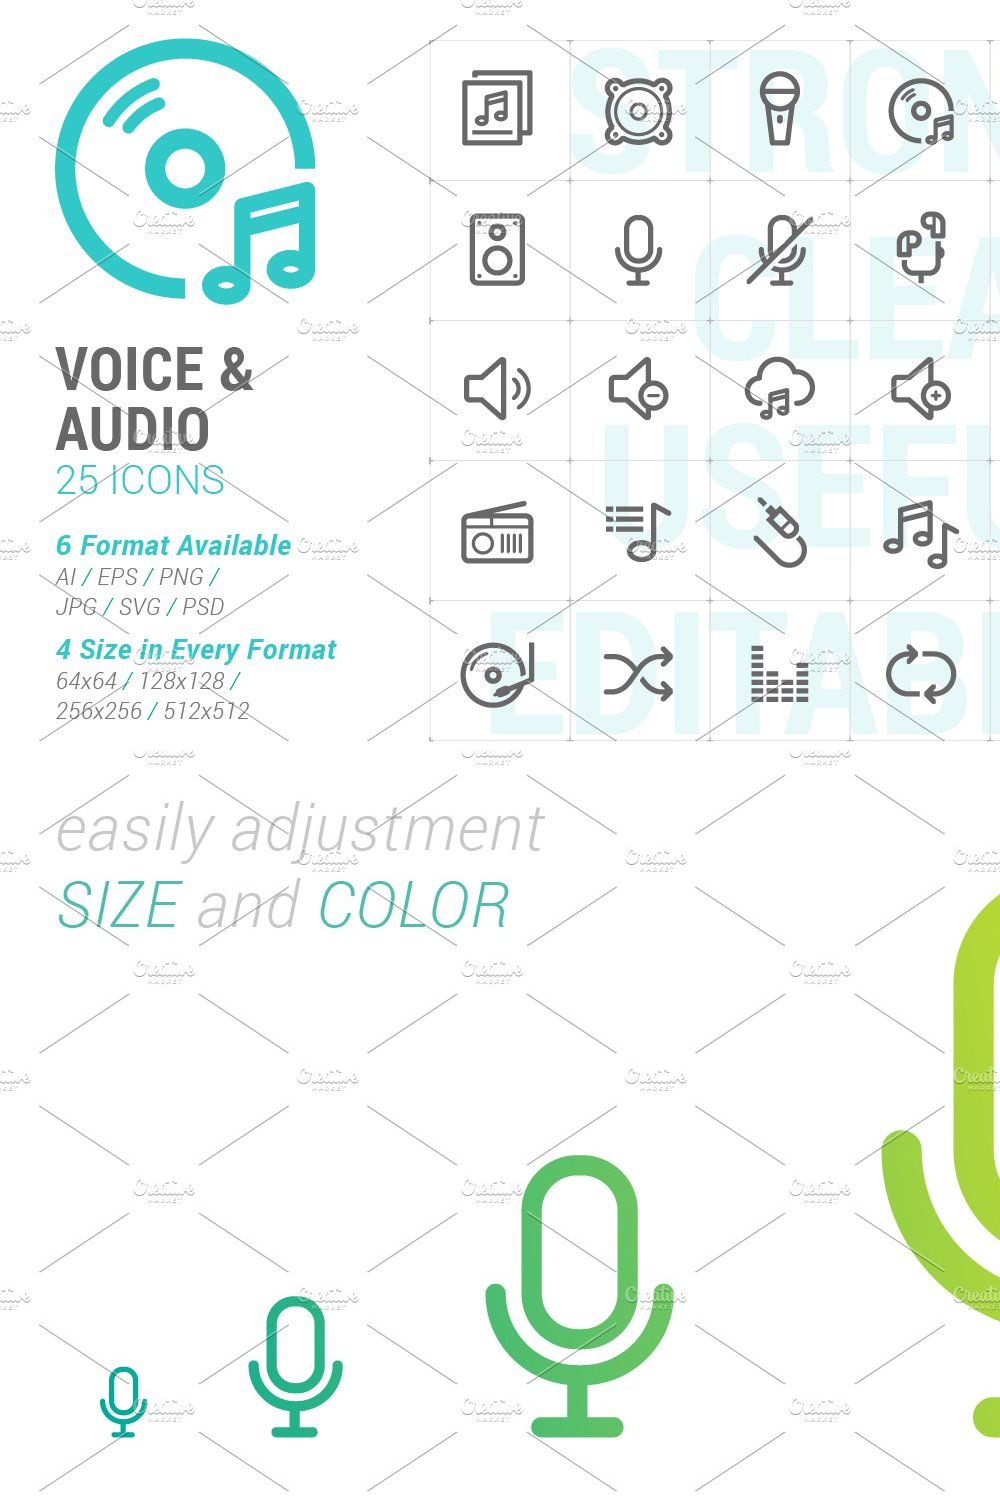 Voice & Audio Mini Icon pinterest preview image.